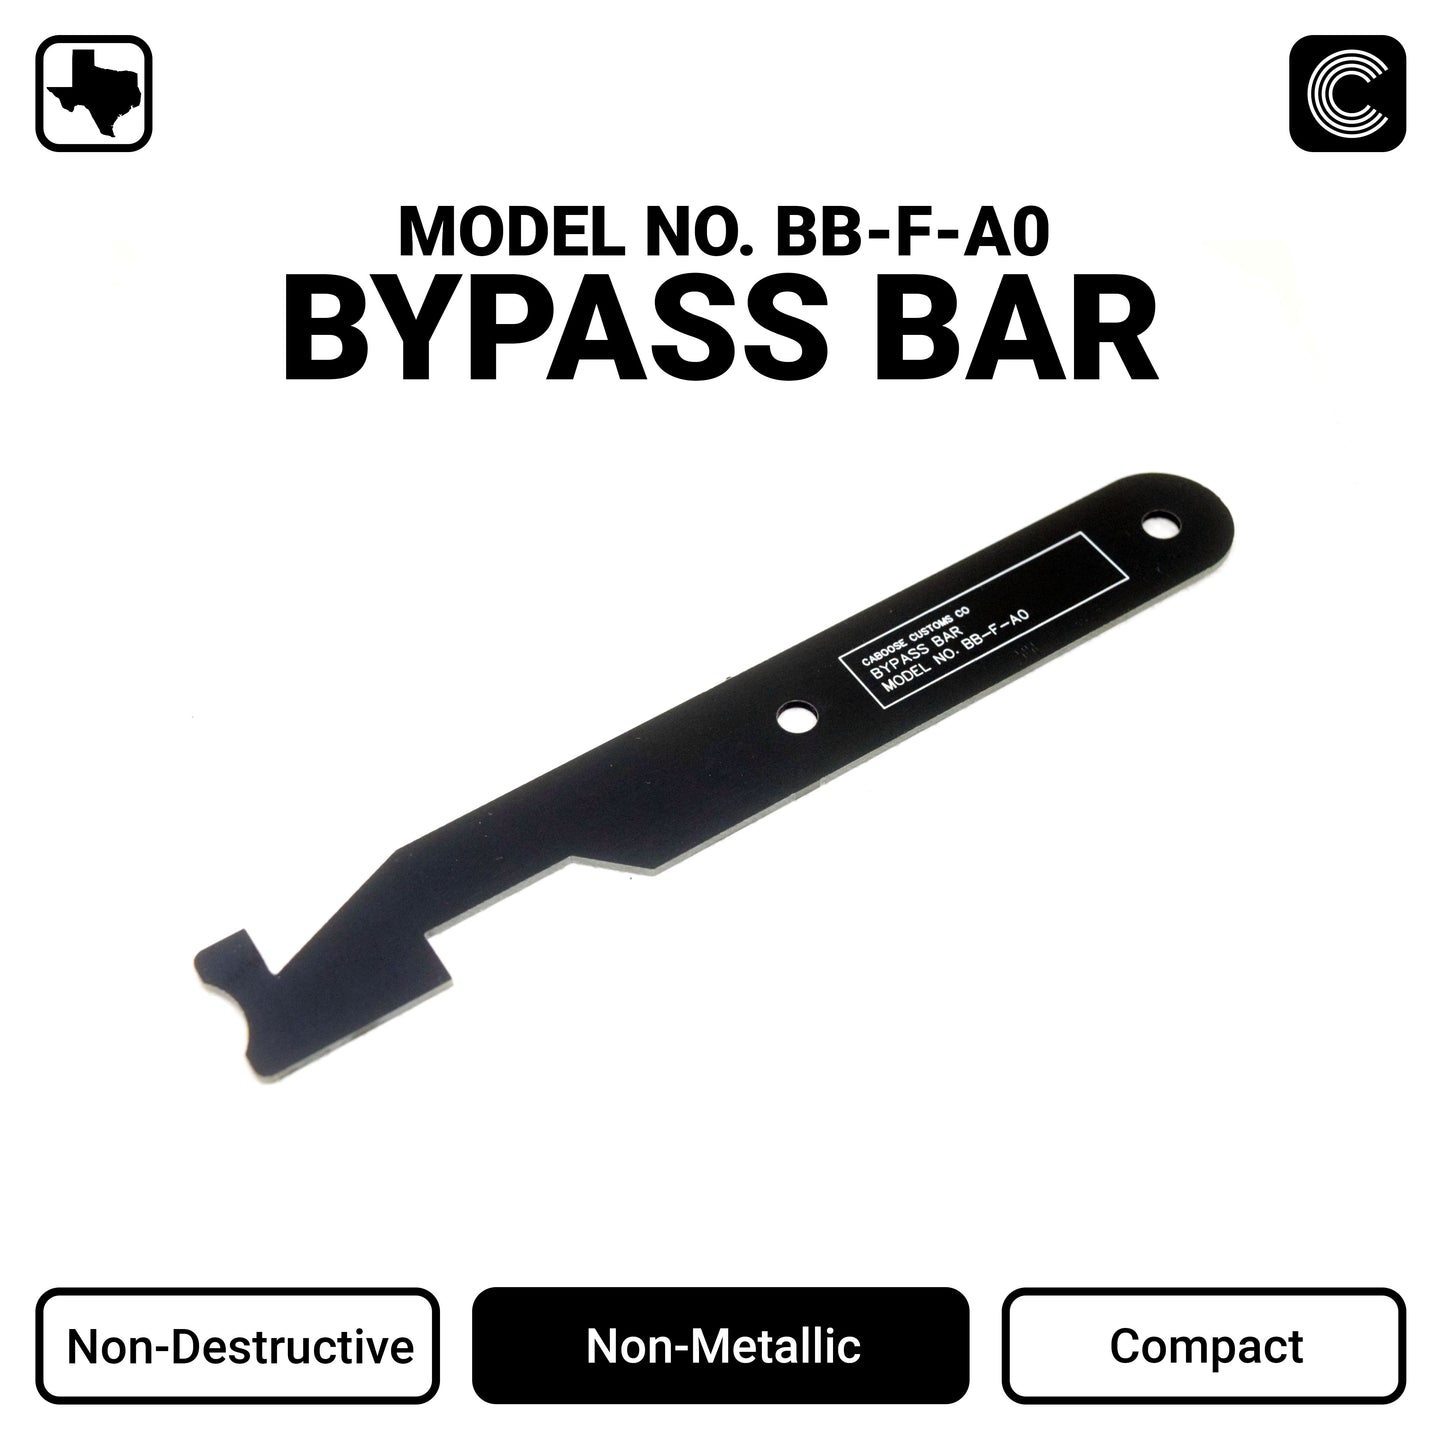 Bypass Bar, Non-Metallic